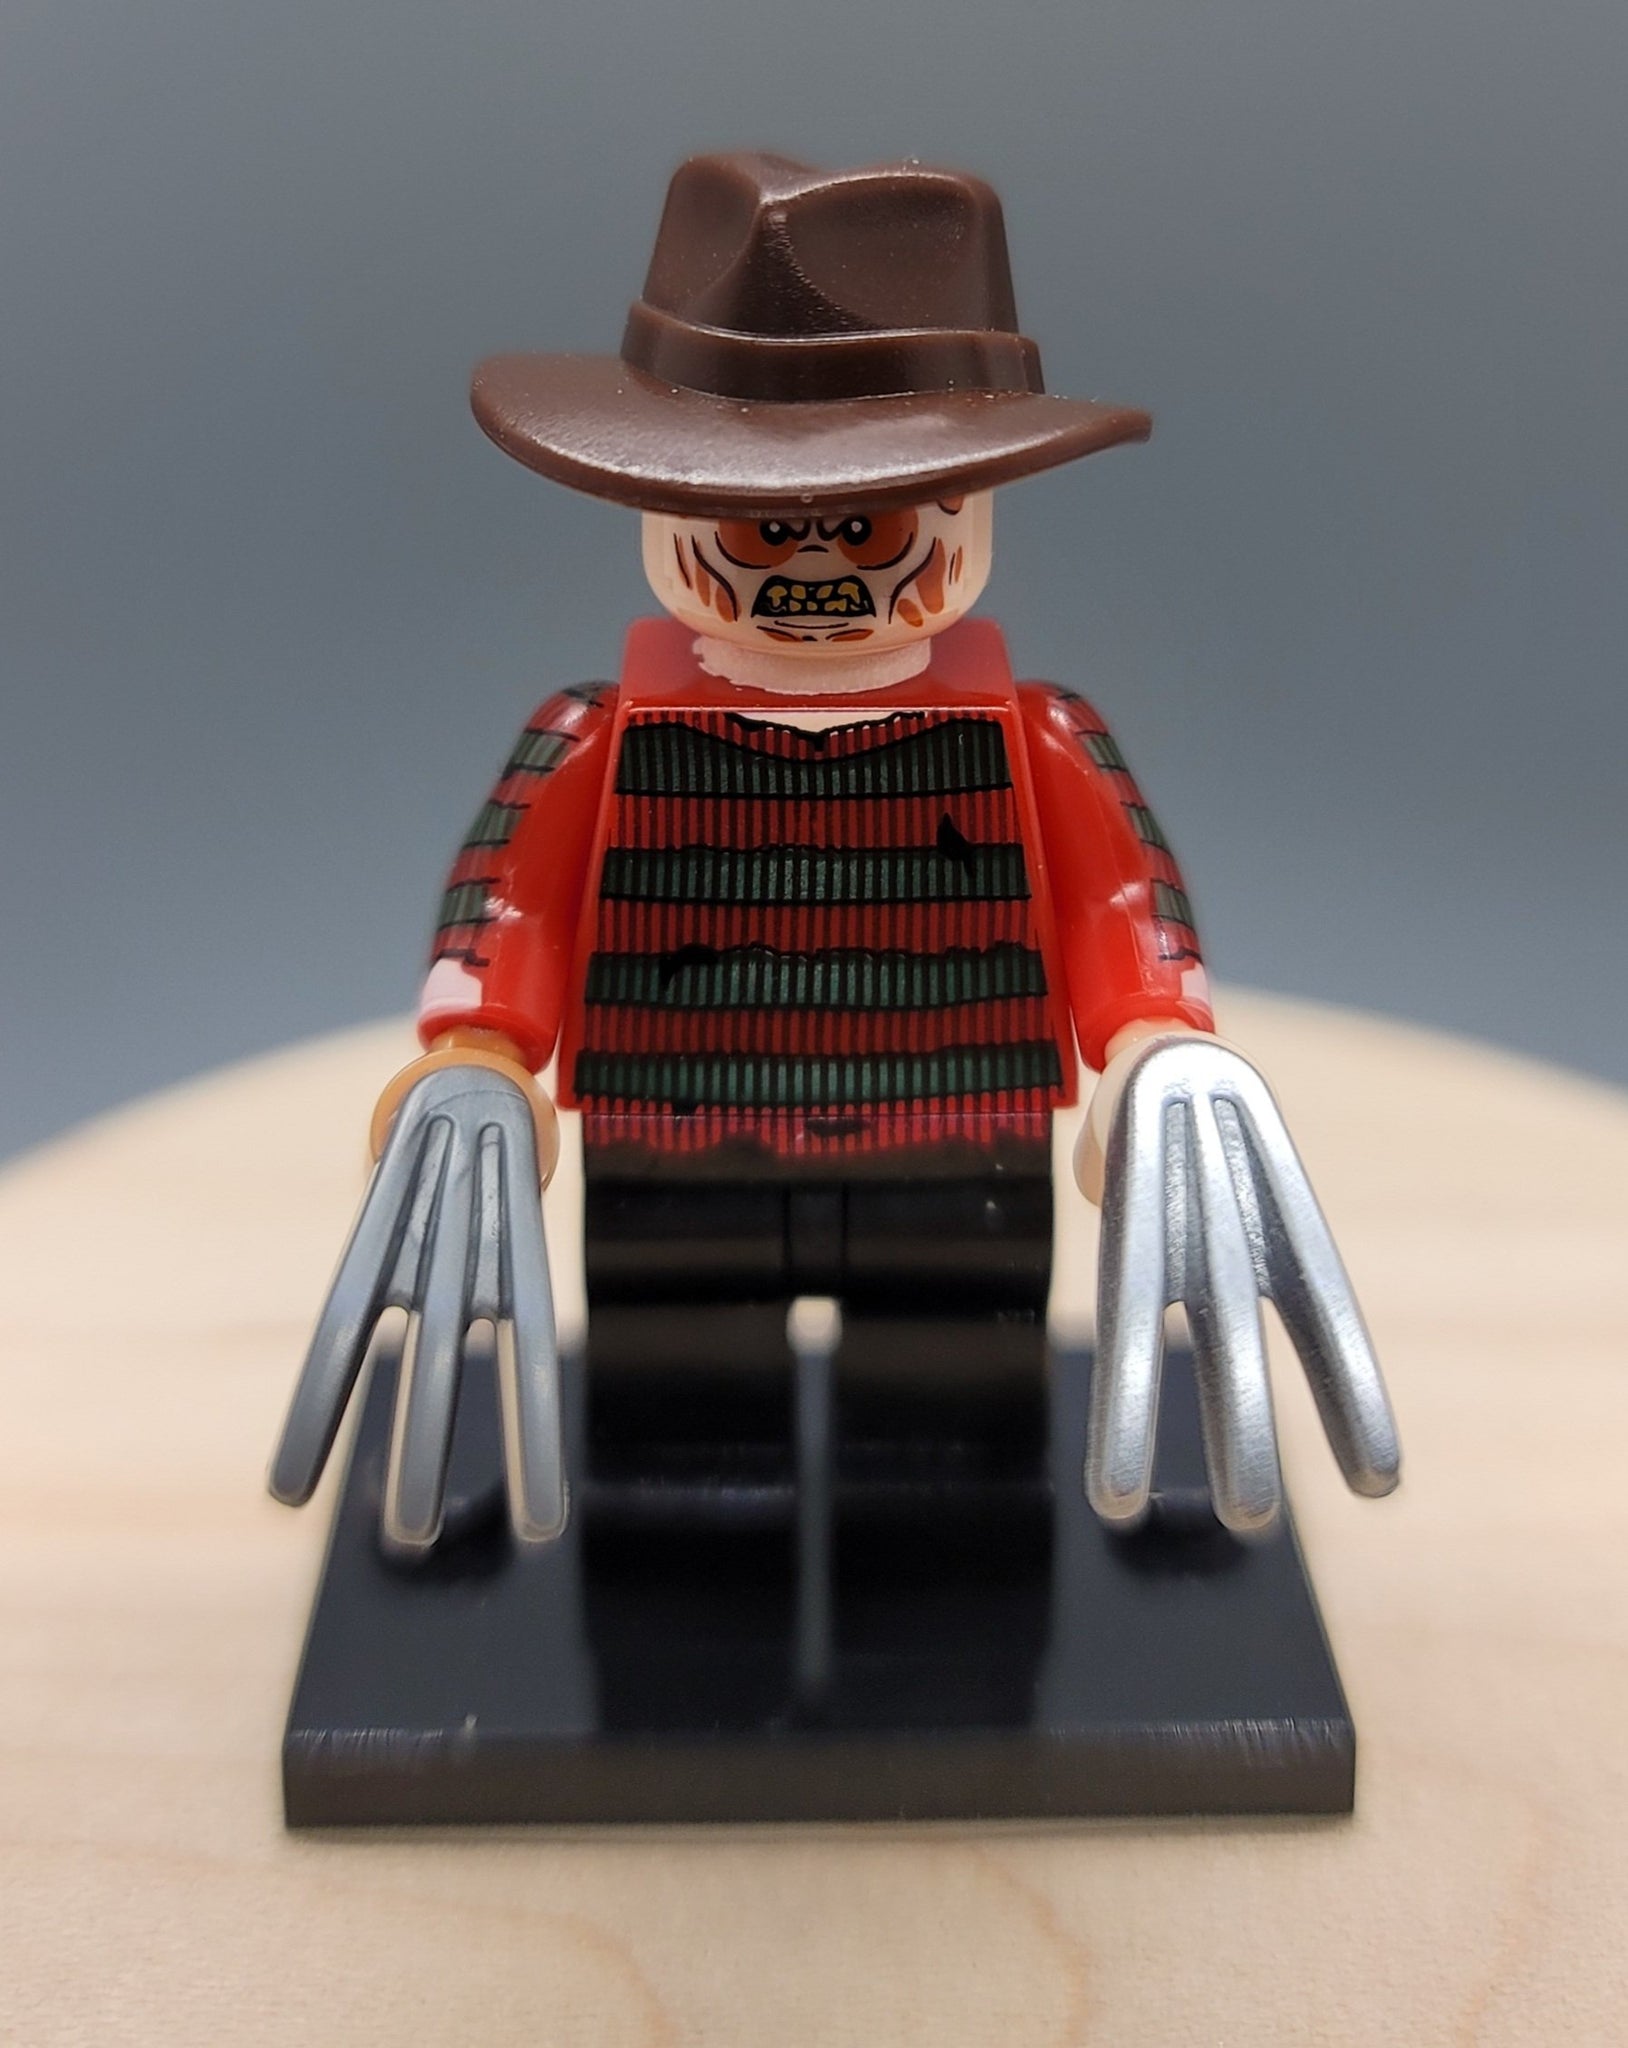 Freddy Custom minifigure by Beau's Bricks. Brand new in package. Please visit shop, lots more! - BeausBricks